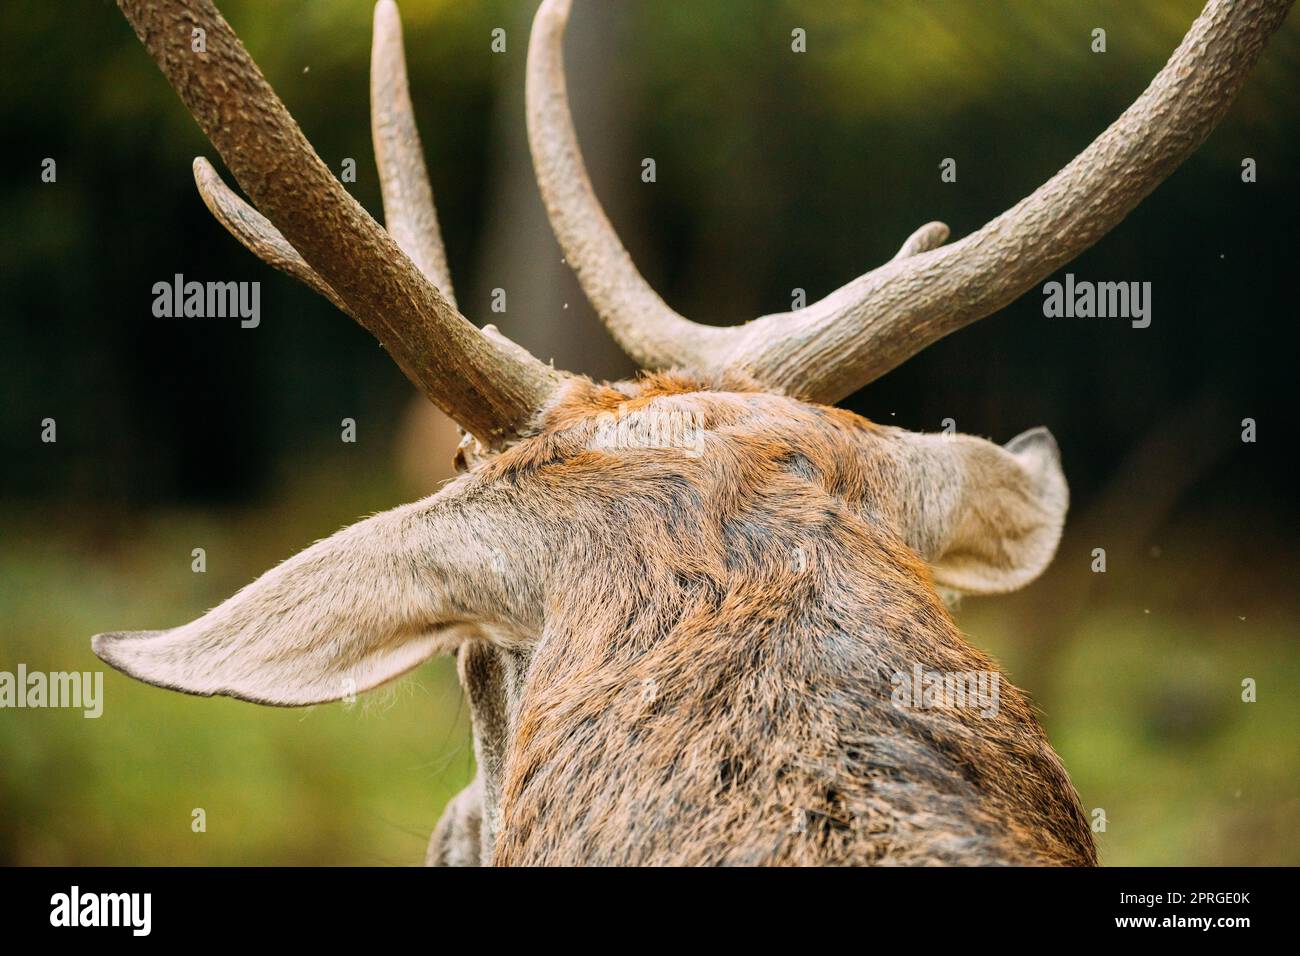 Close Up Of Antlers Of Male European Red Deer Or Cervus Elaphus In Autumn Forest. Belarus Stock Photo